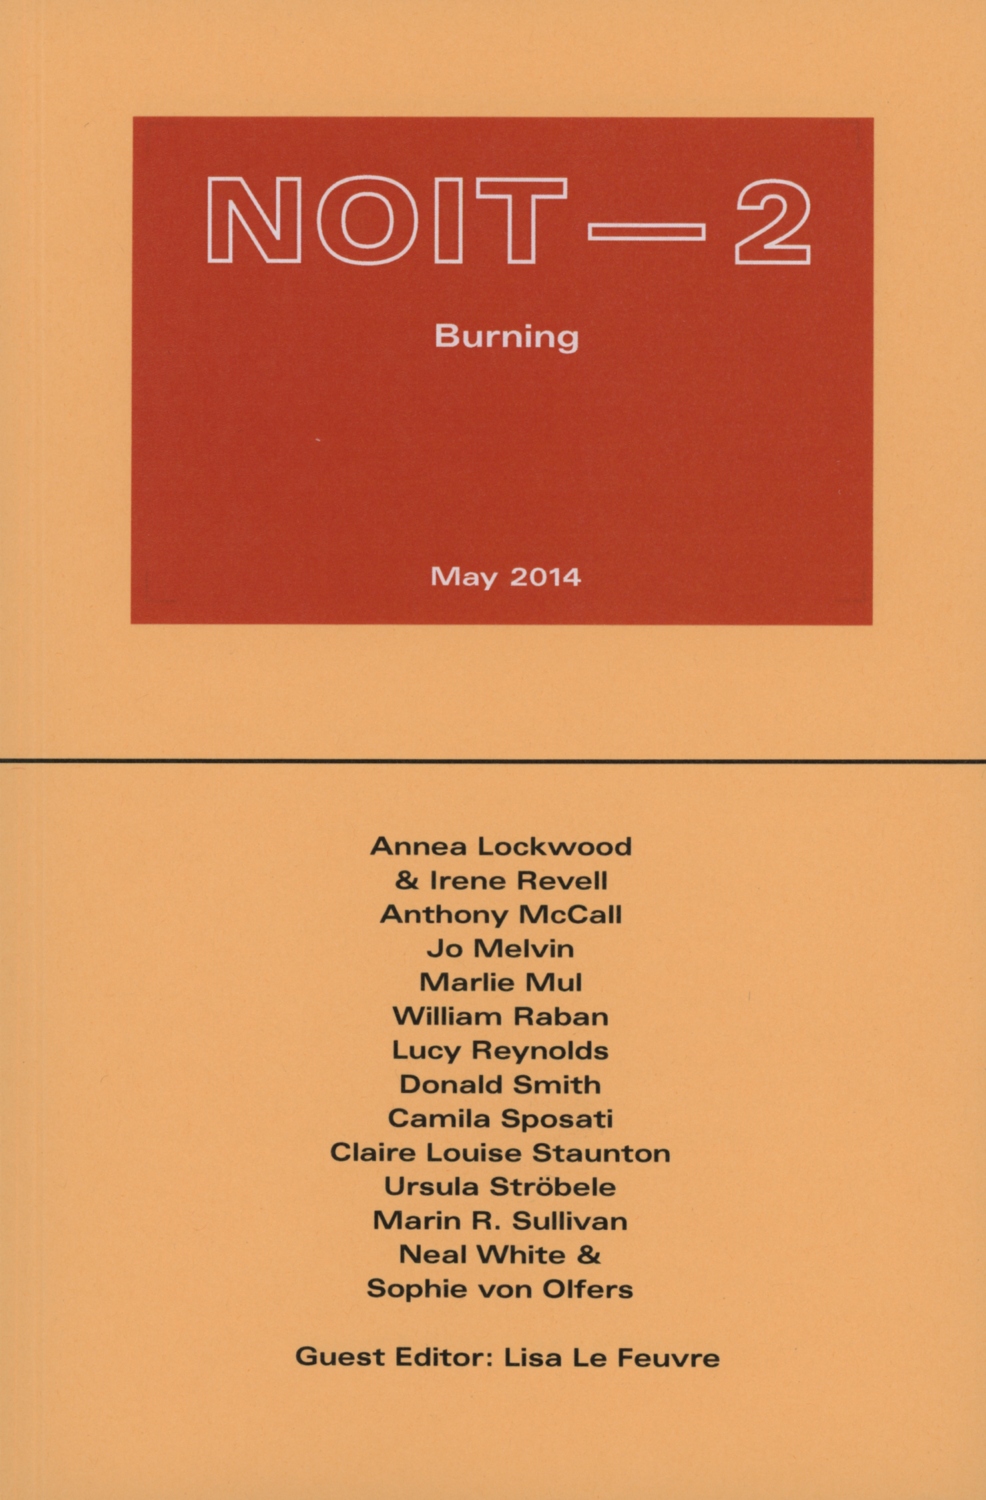 Noit-2 Burning, May, 2014